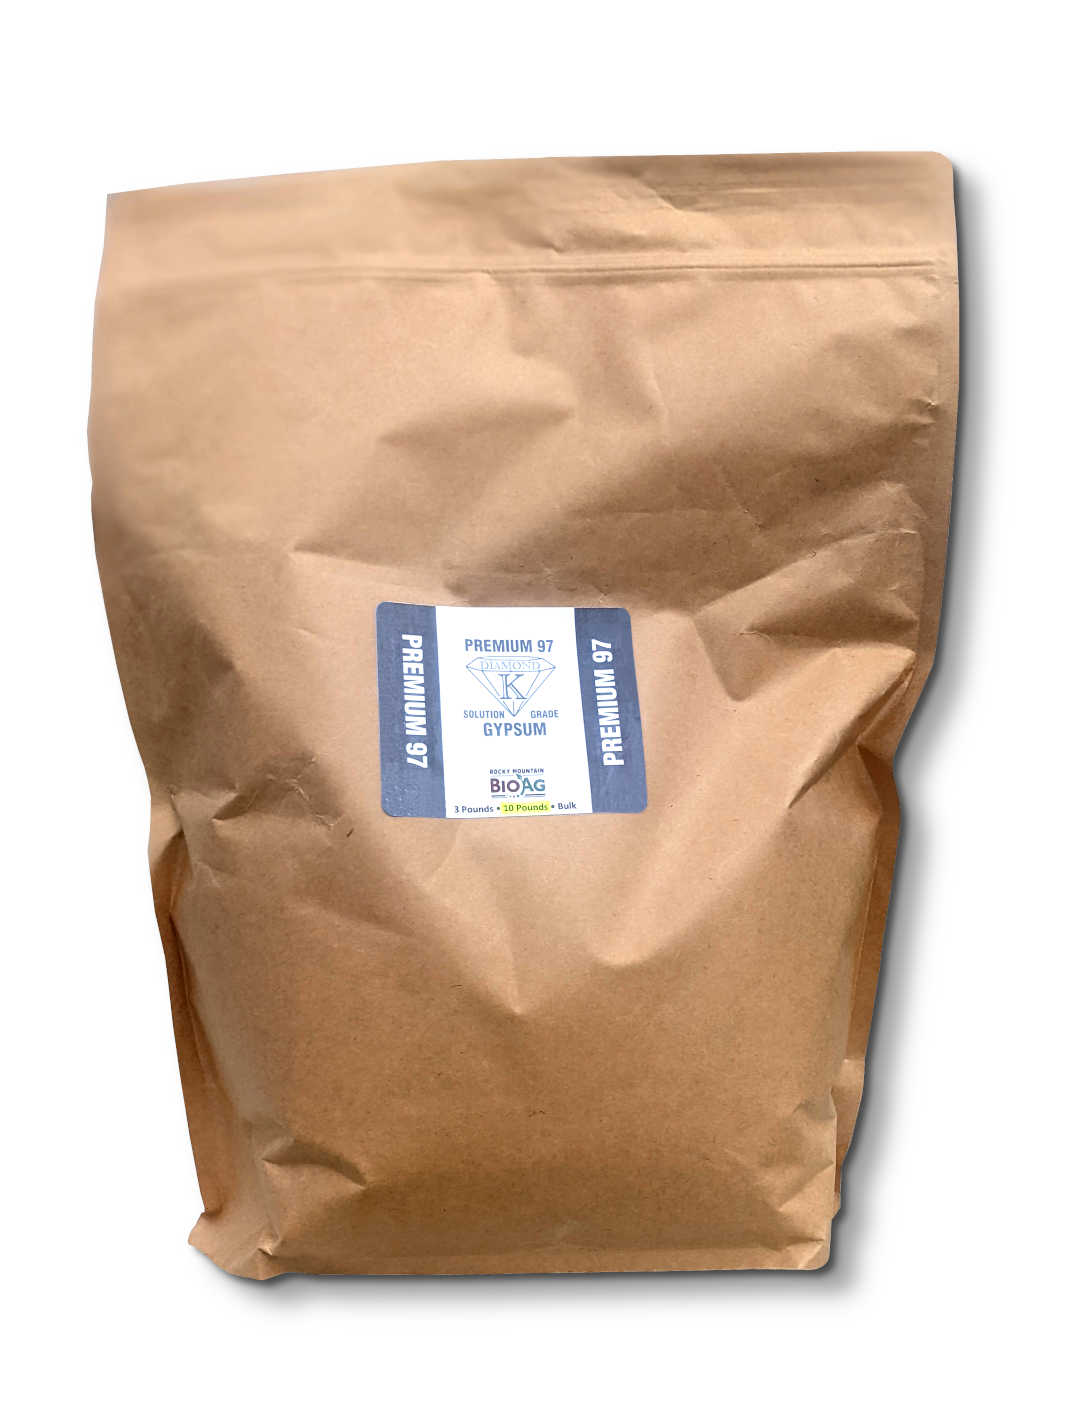 Diamond K Premium Organic Solution Grade Gypsum in 10 Pound Bag